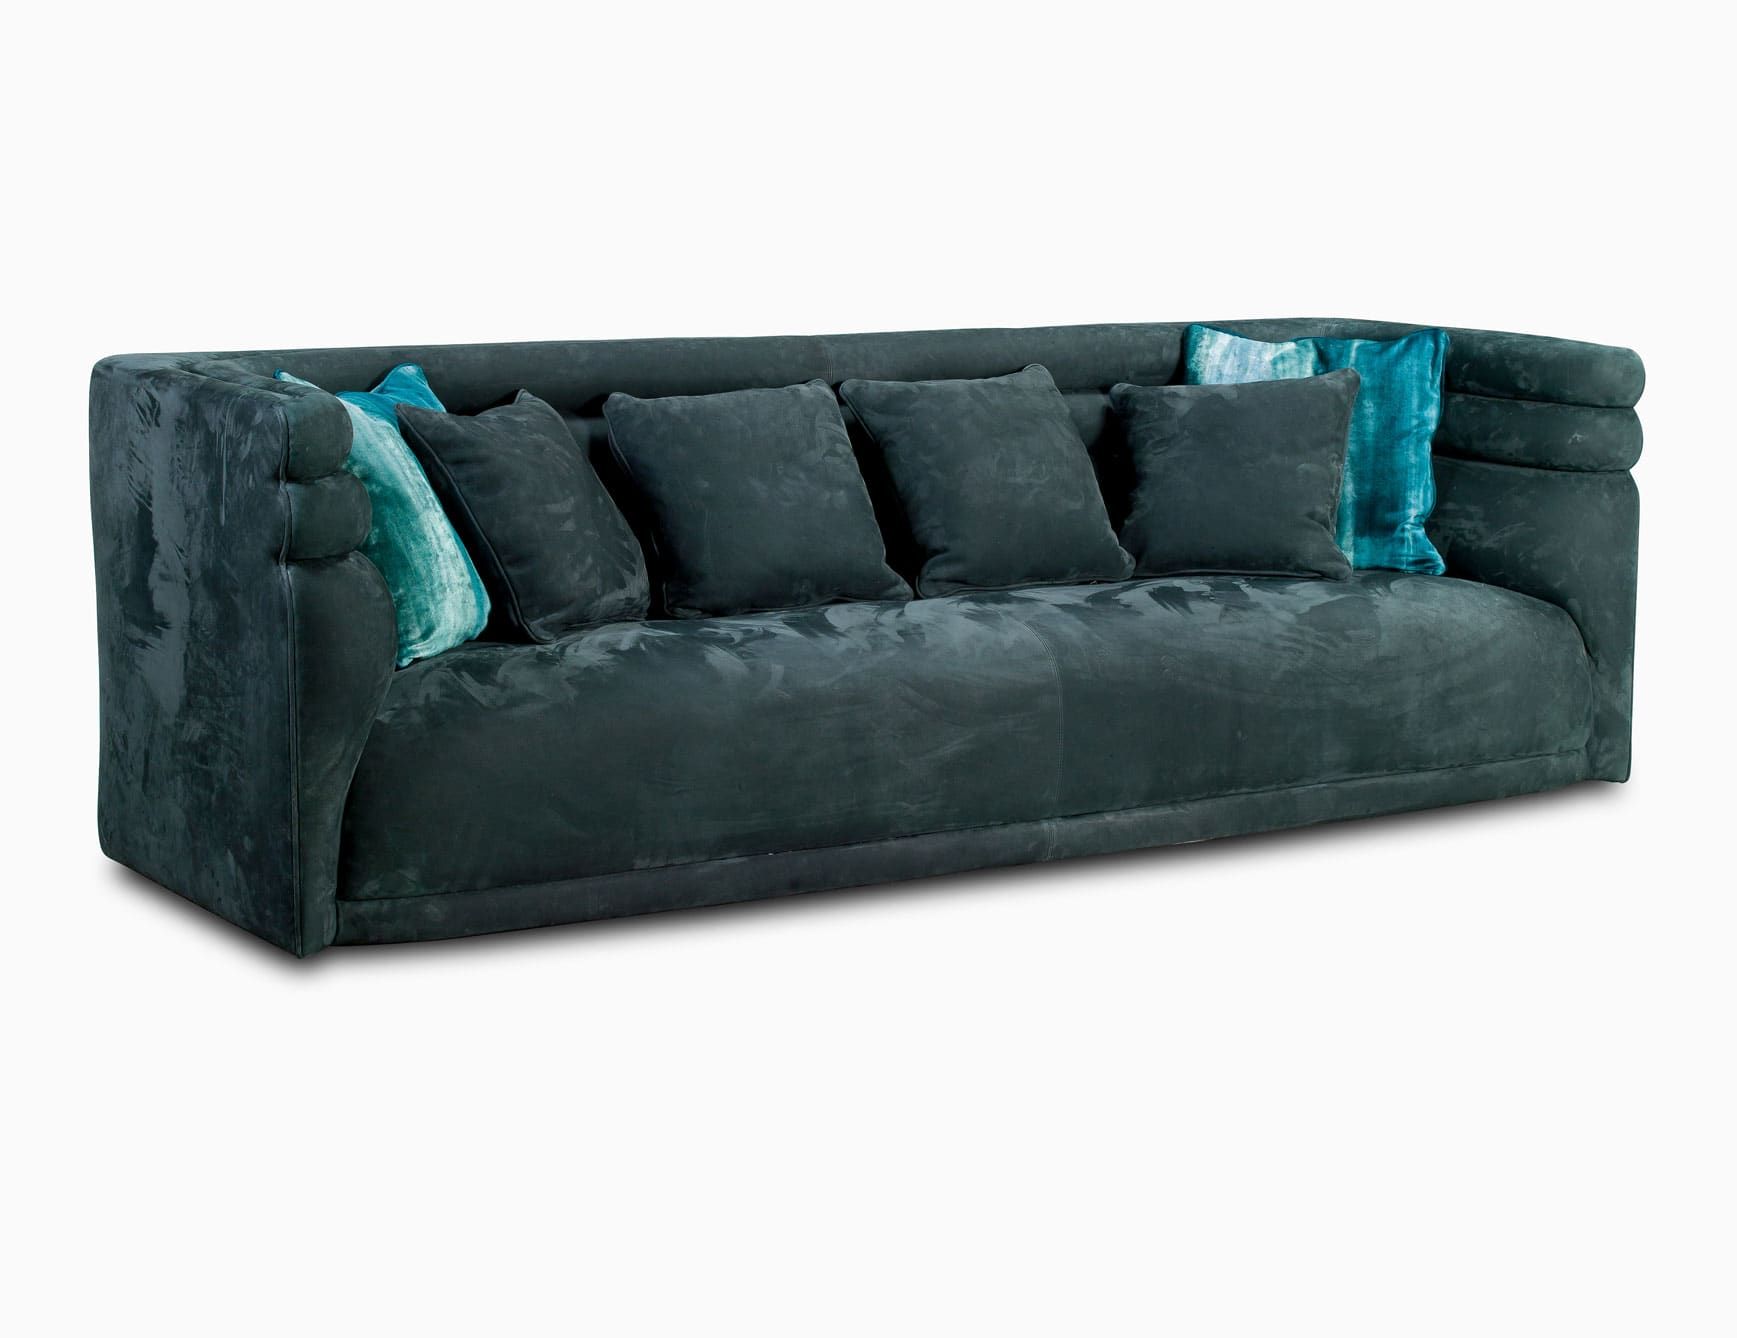 Michelin contemporary Italian sofa chair with green fabric